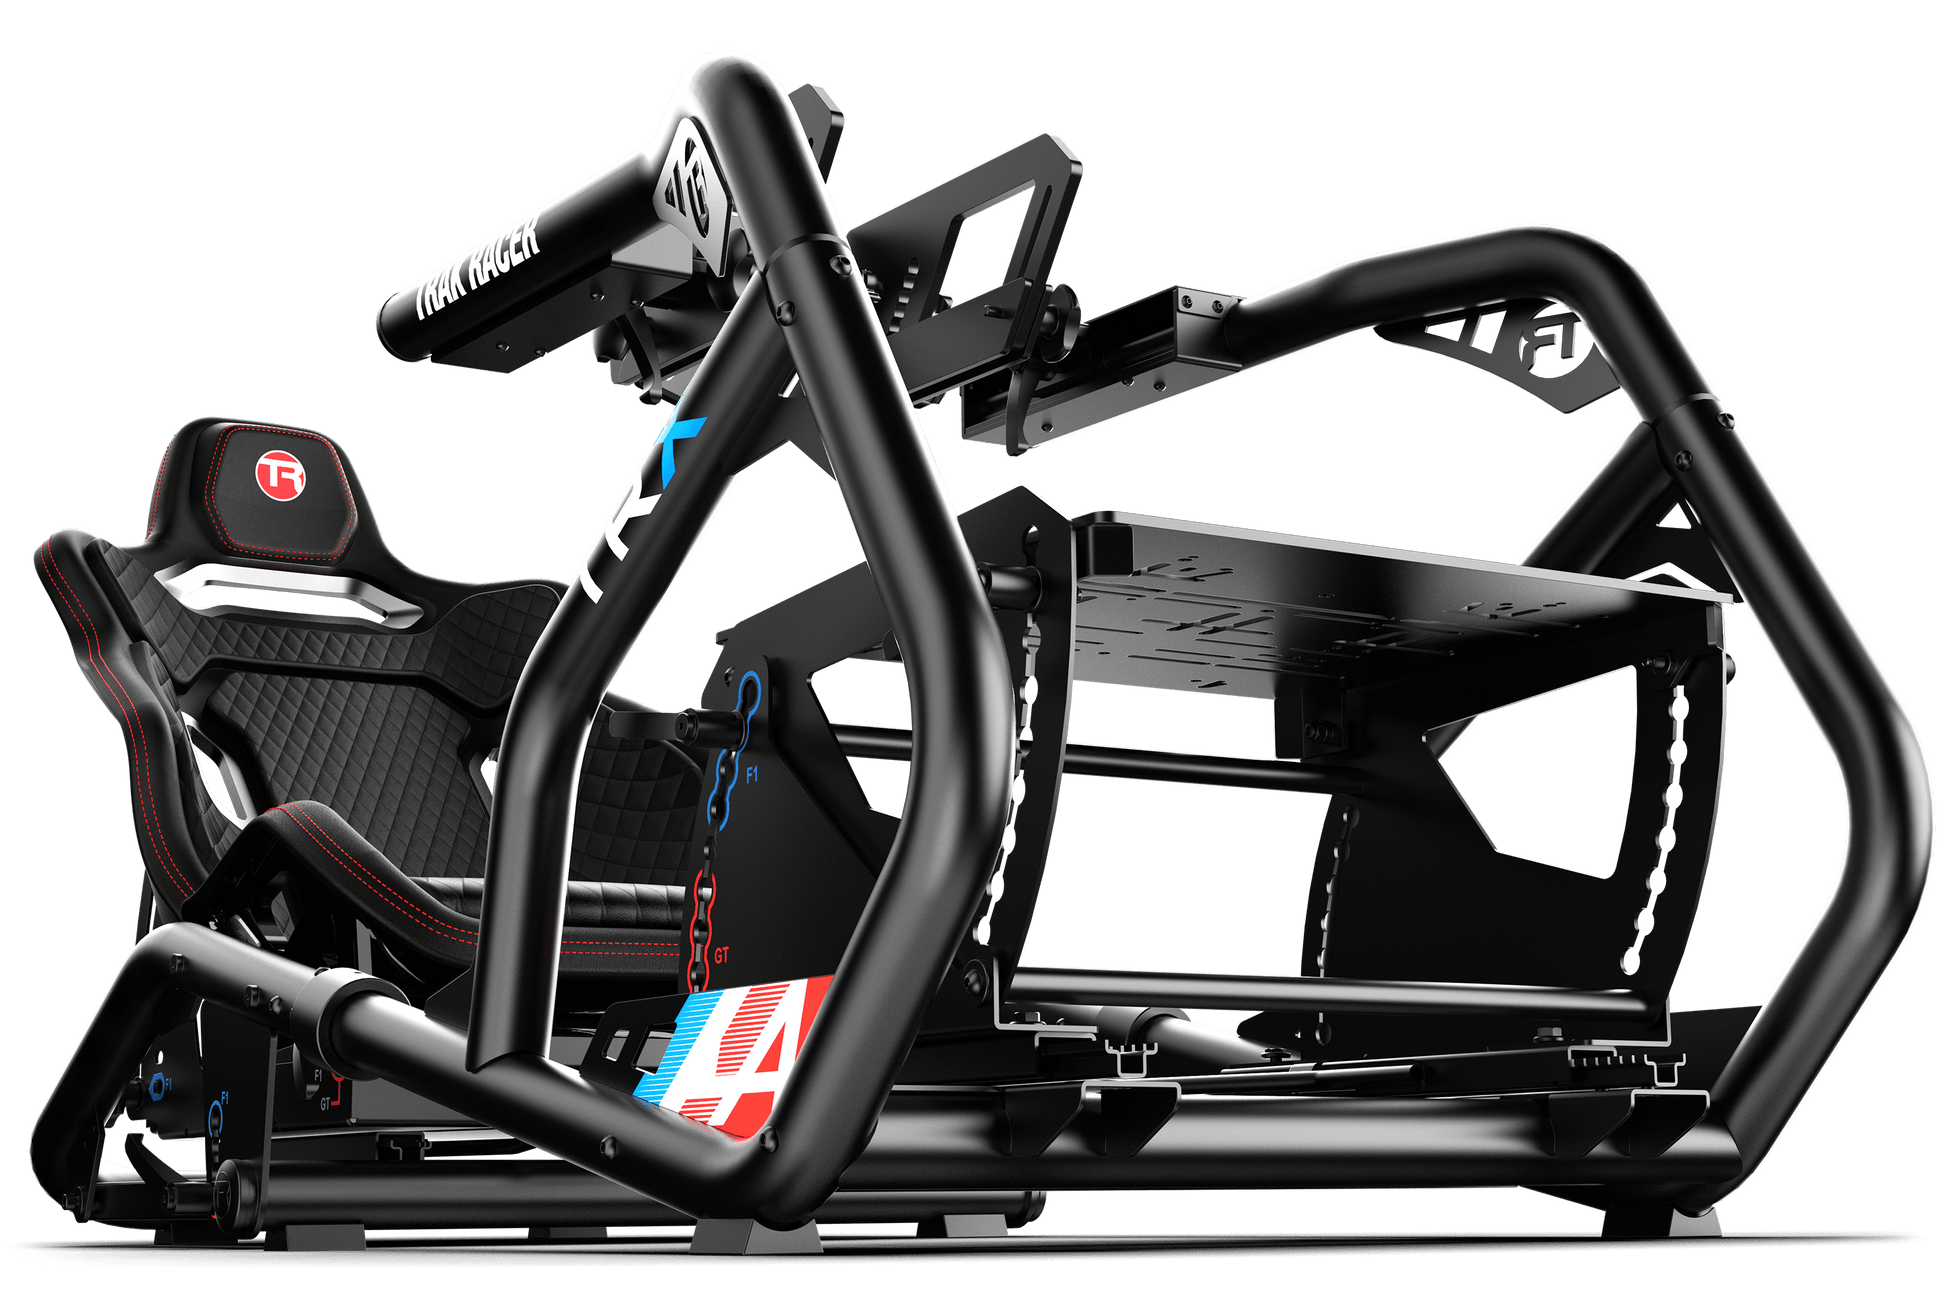 Trak Racer Alpine Racing TRX Racing Simulator